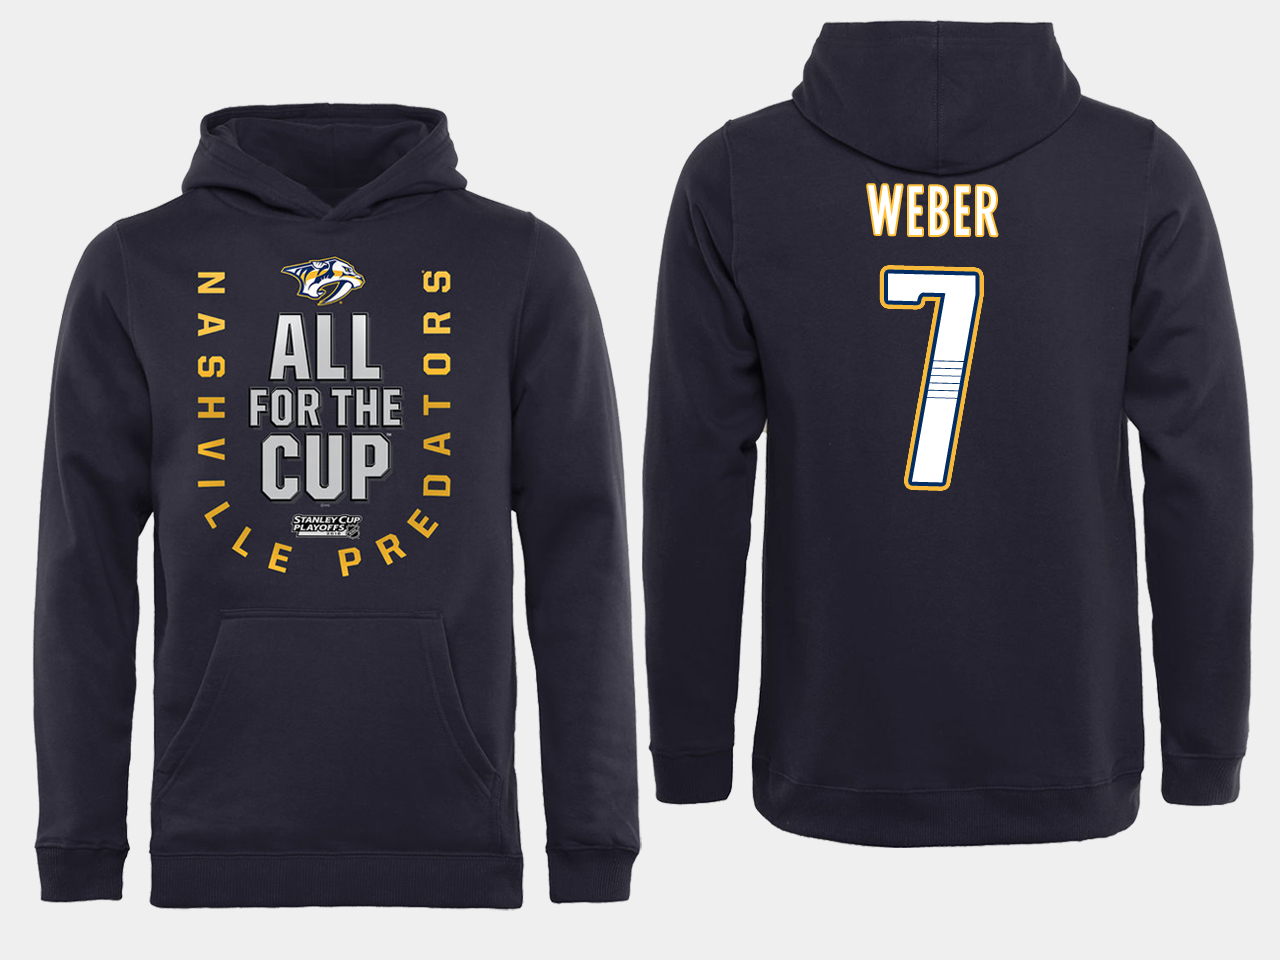 Men NHL Adidas Nashville Predators 7 Weber black ALL for the Cup hoodie